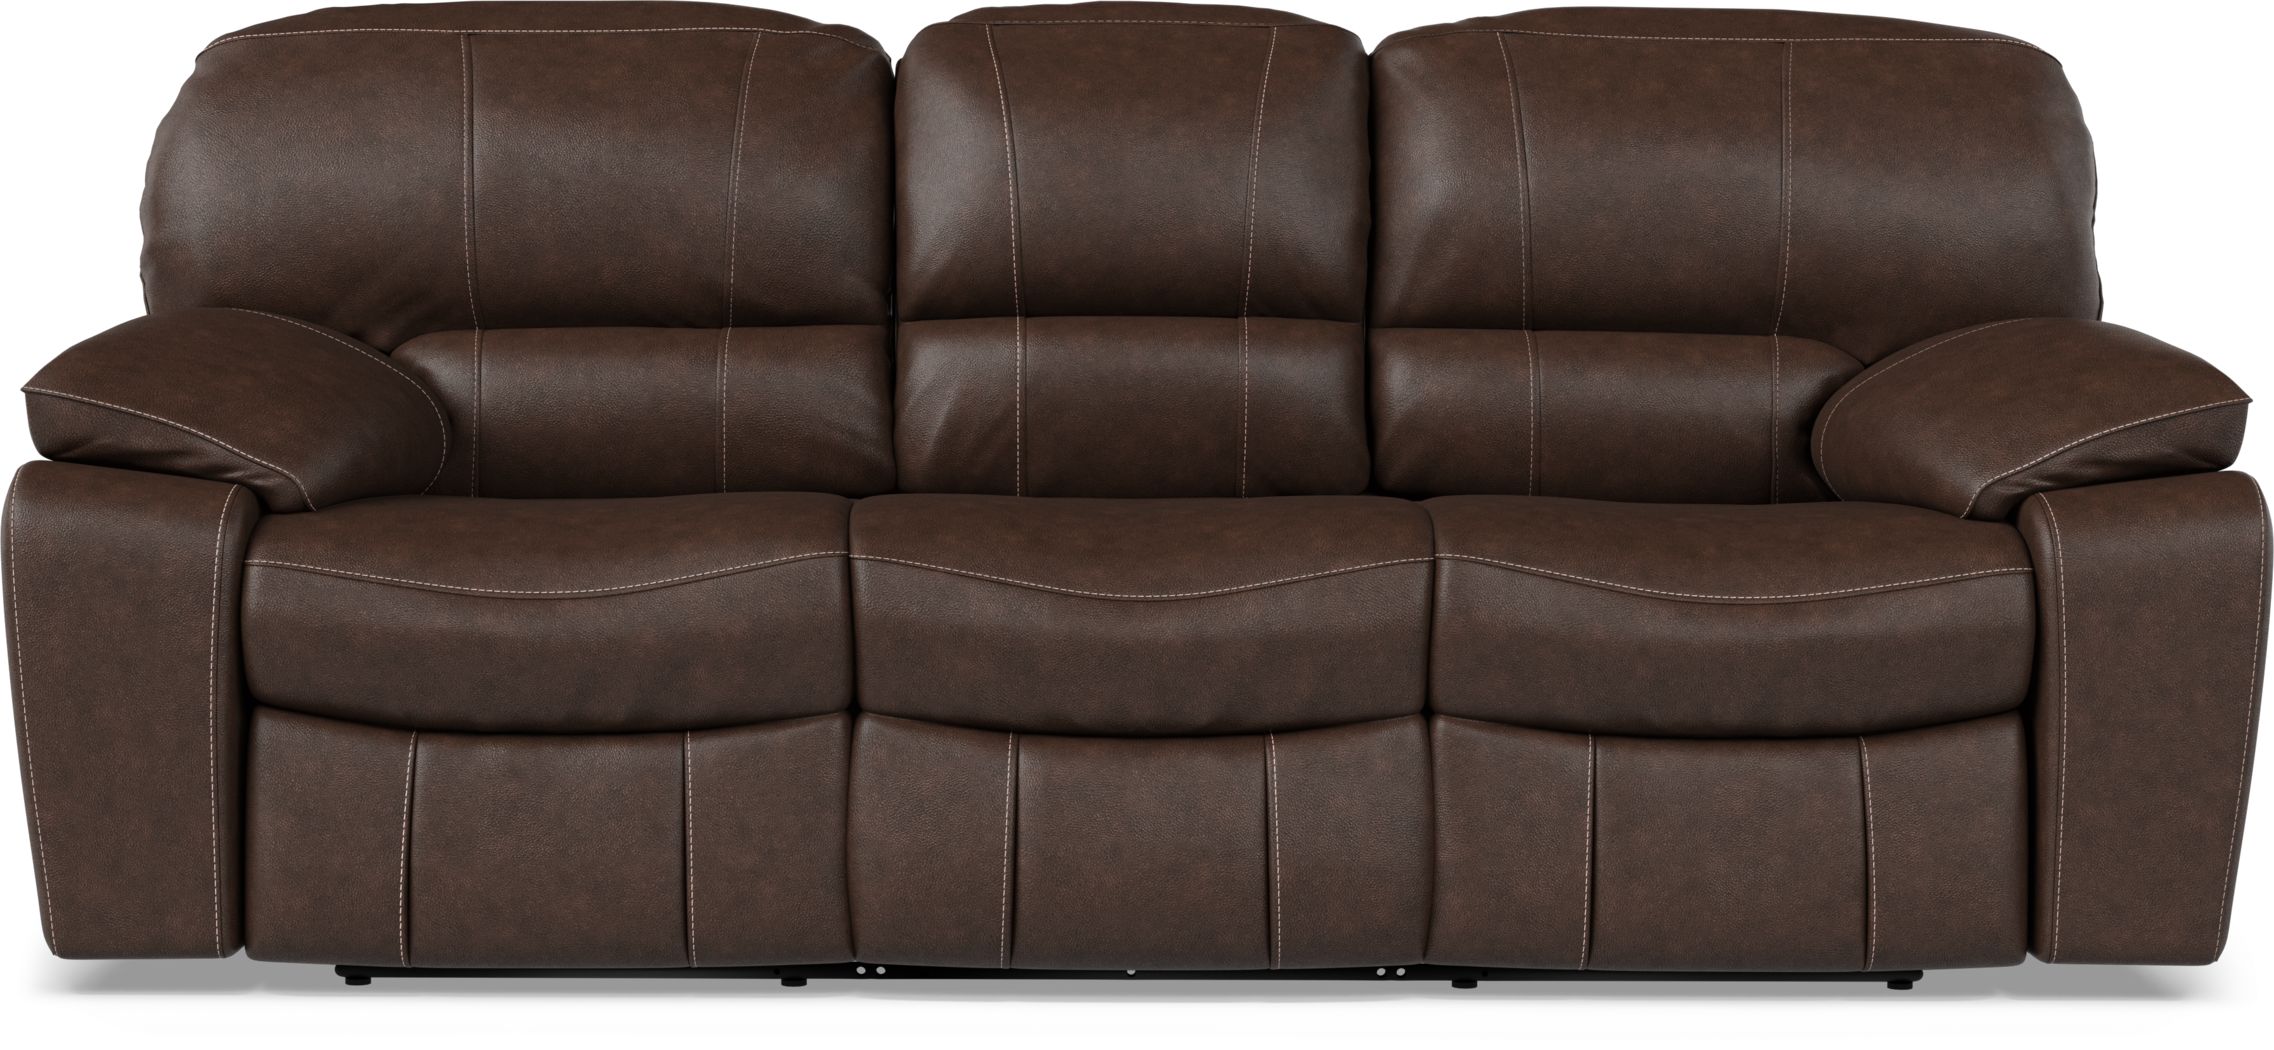 crawford leather reclining sofa